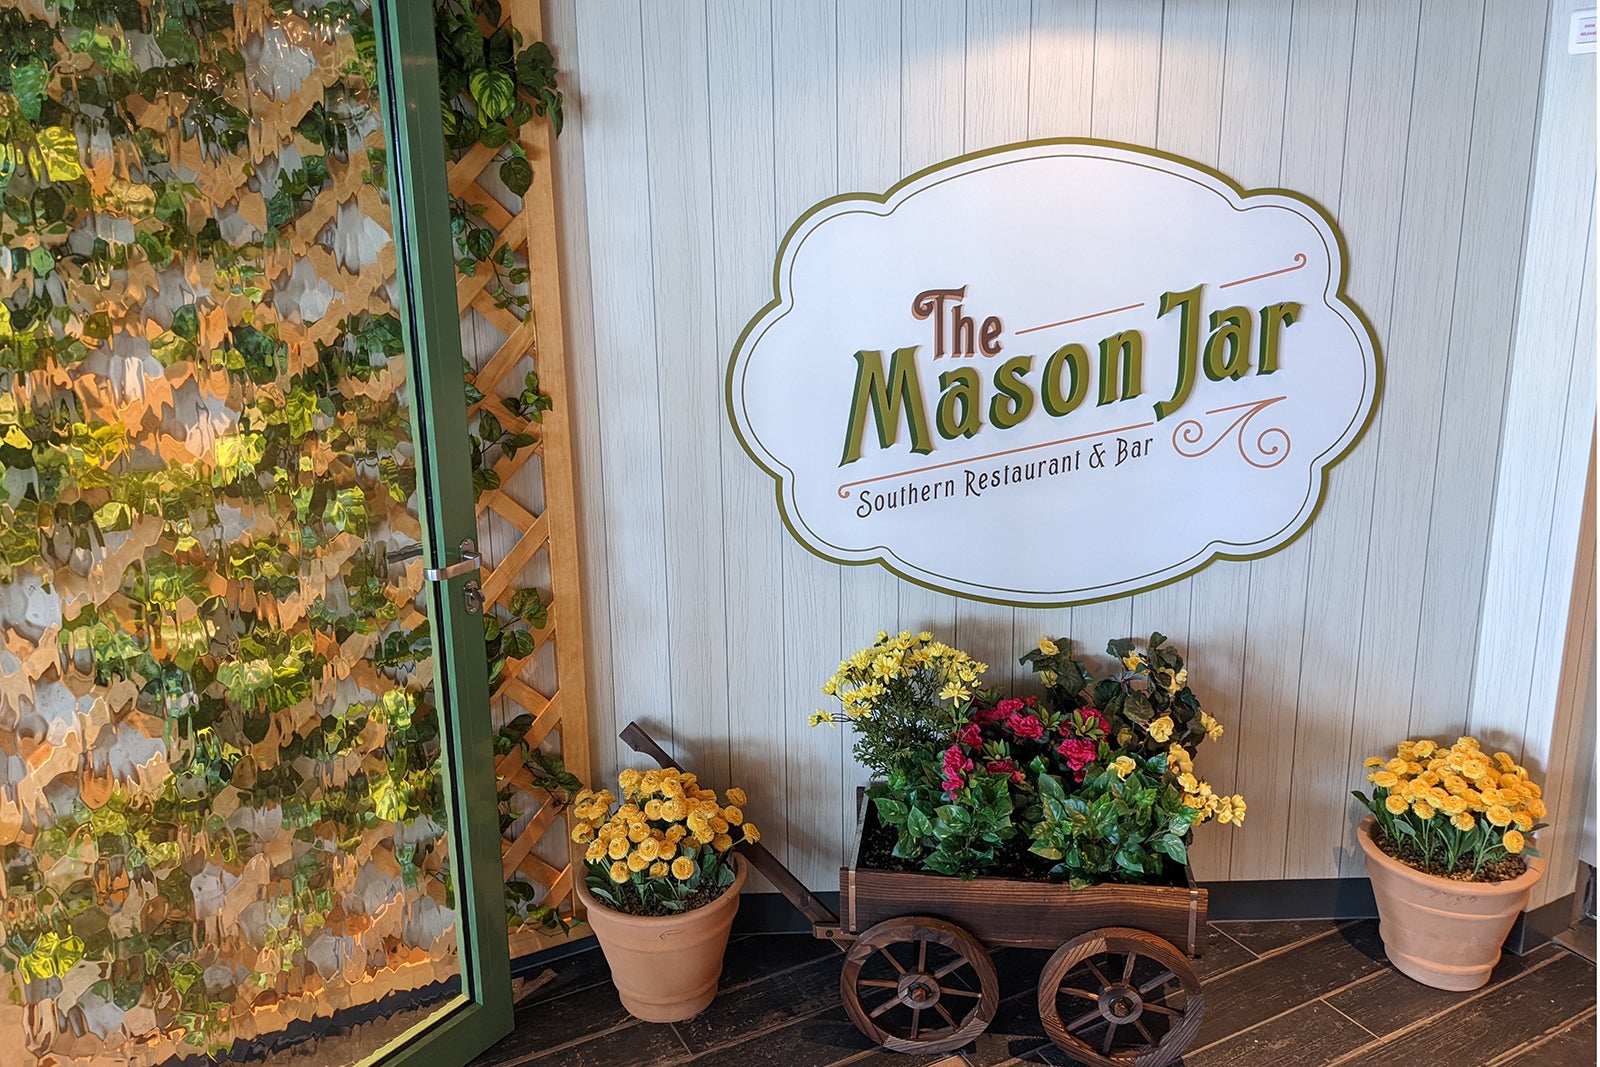 The Mason Jar: A review of Royal Caribbean’s Southern comfort food restaurant